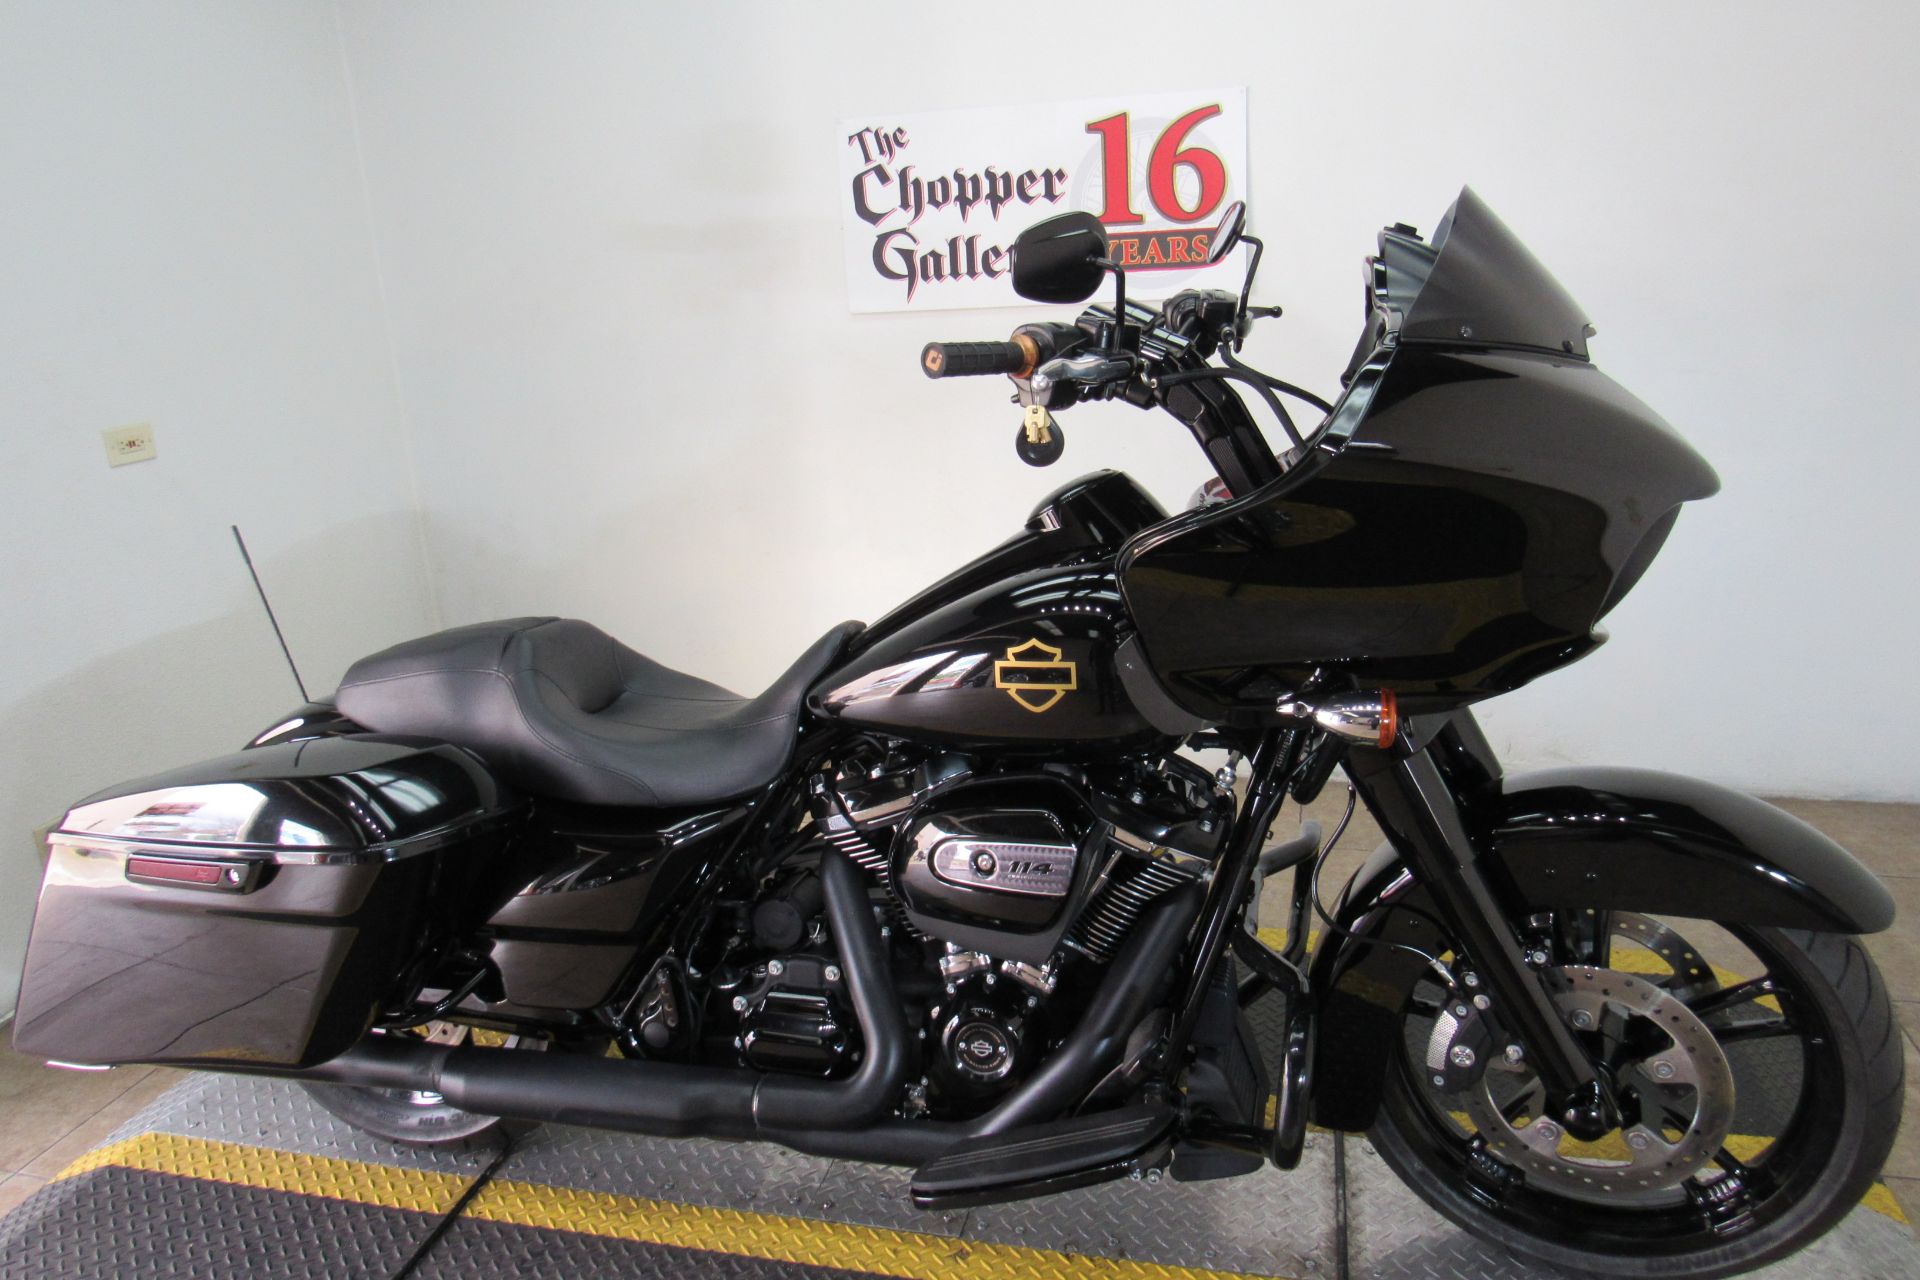 2020 Harley-Davidson Road Glide® Special in Temecula, California - Photo 5